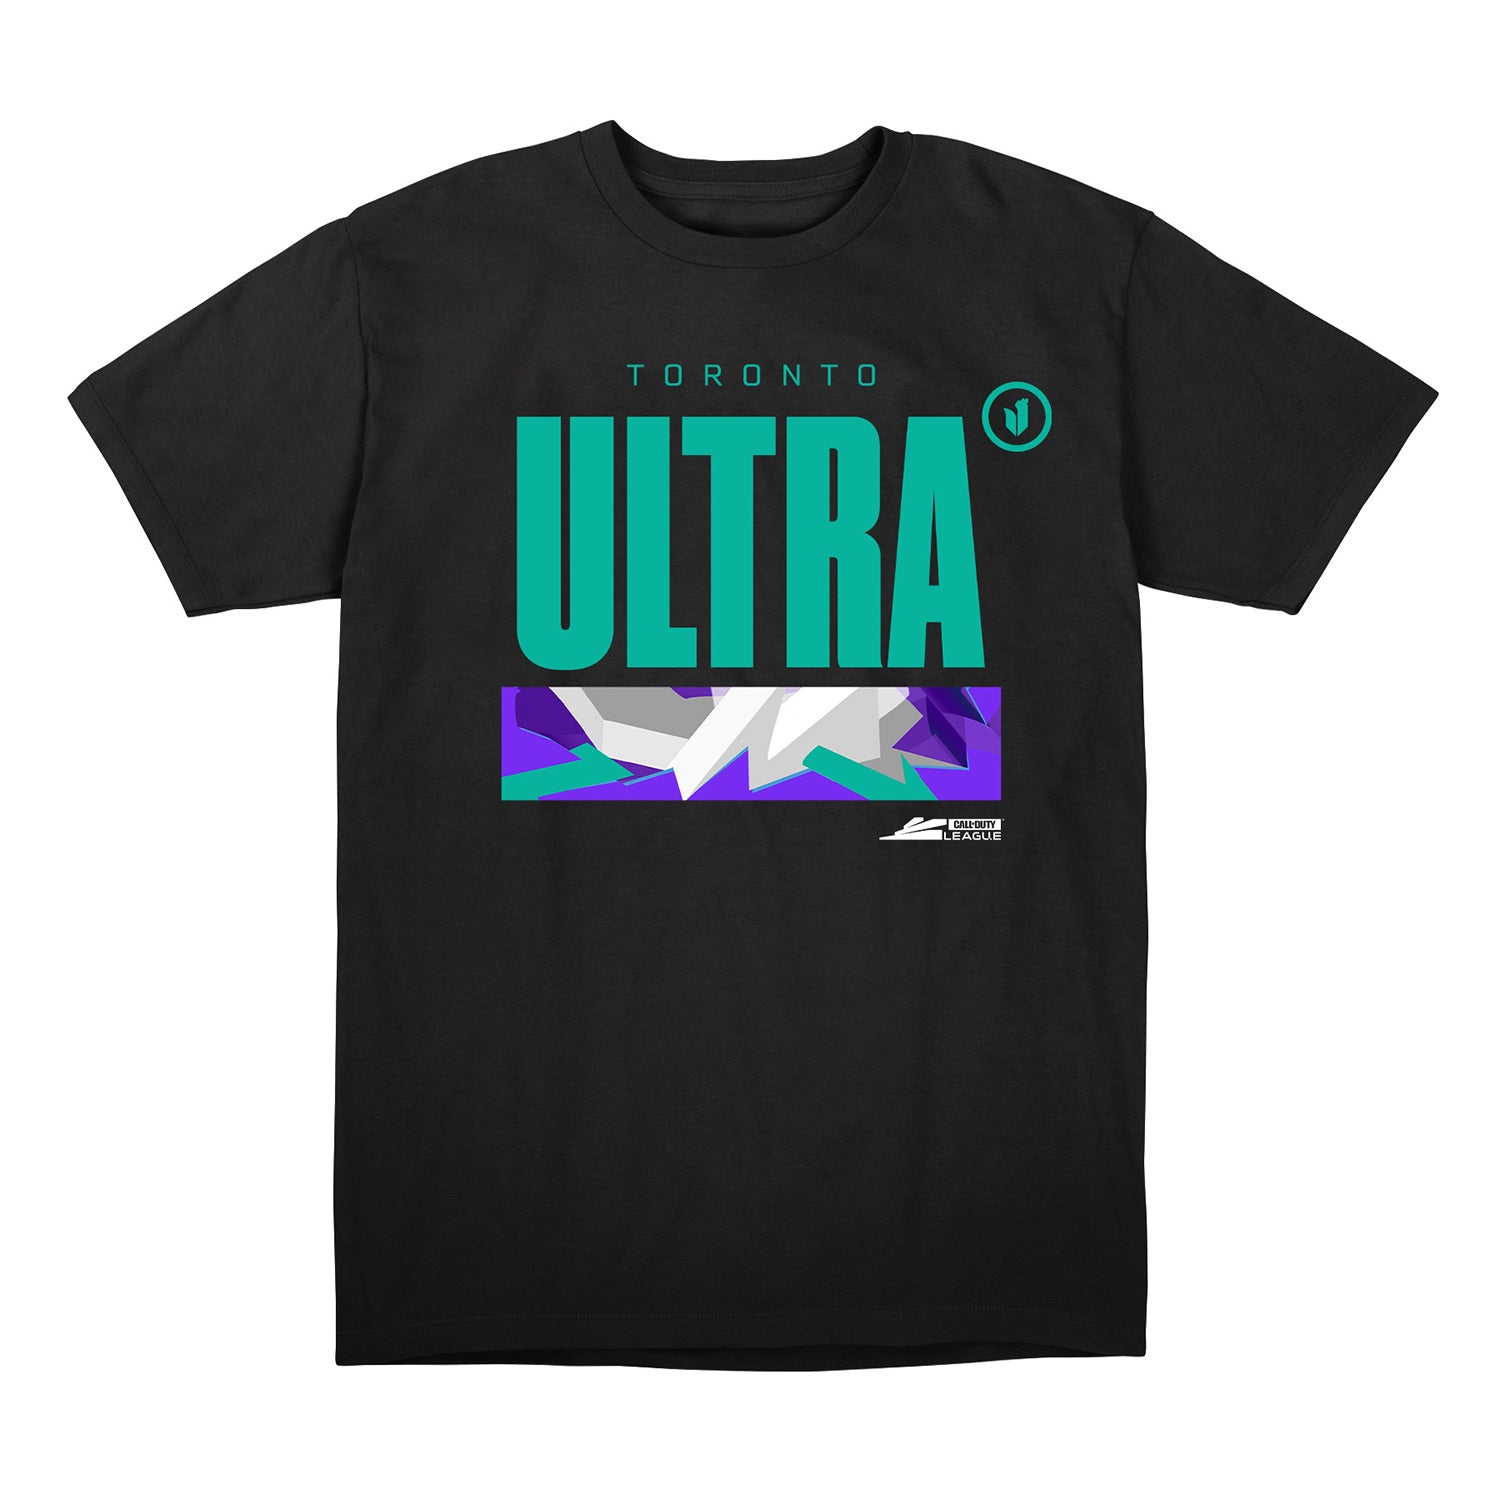 Toronto Ultra Black Camo T-Shirt - Front View